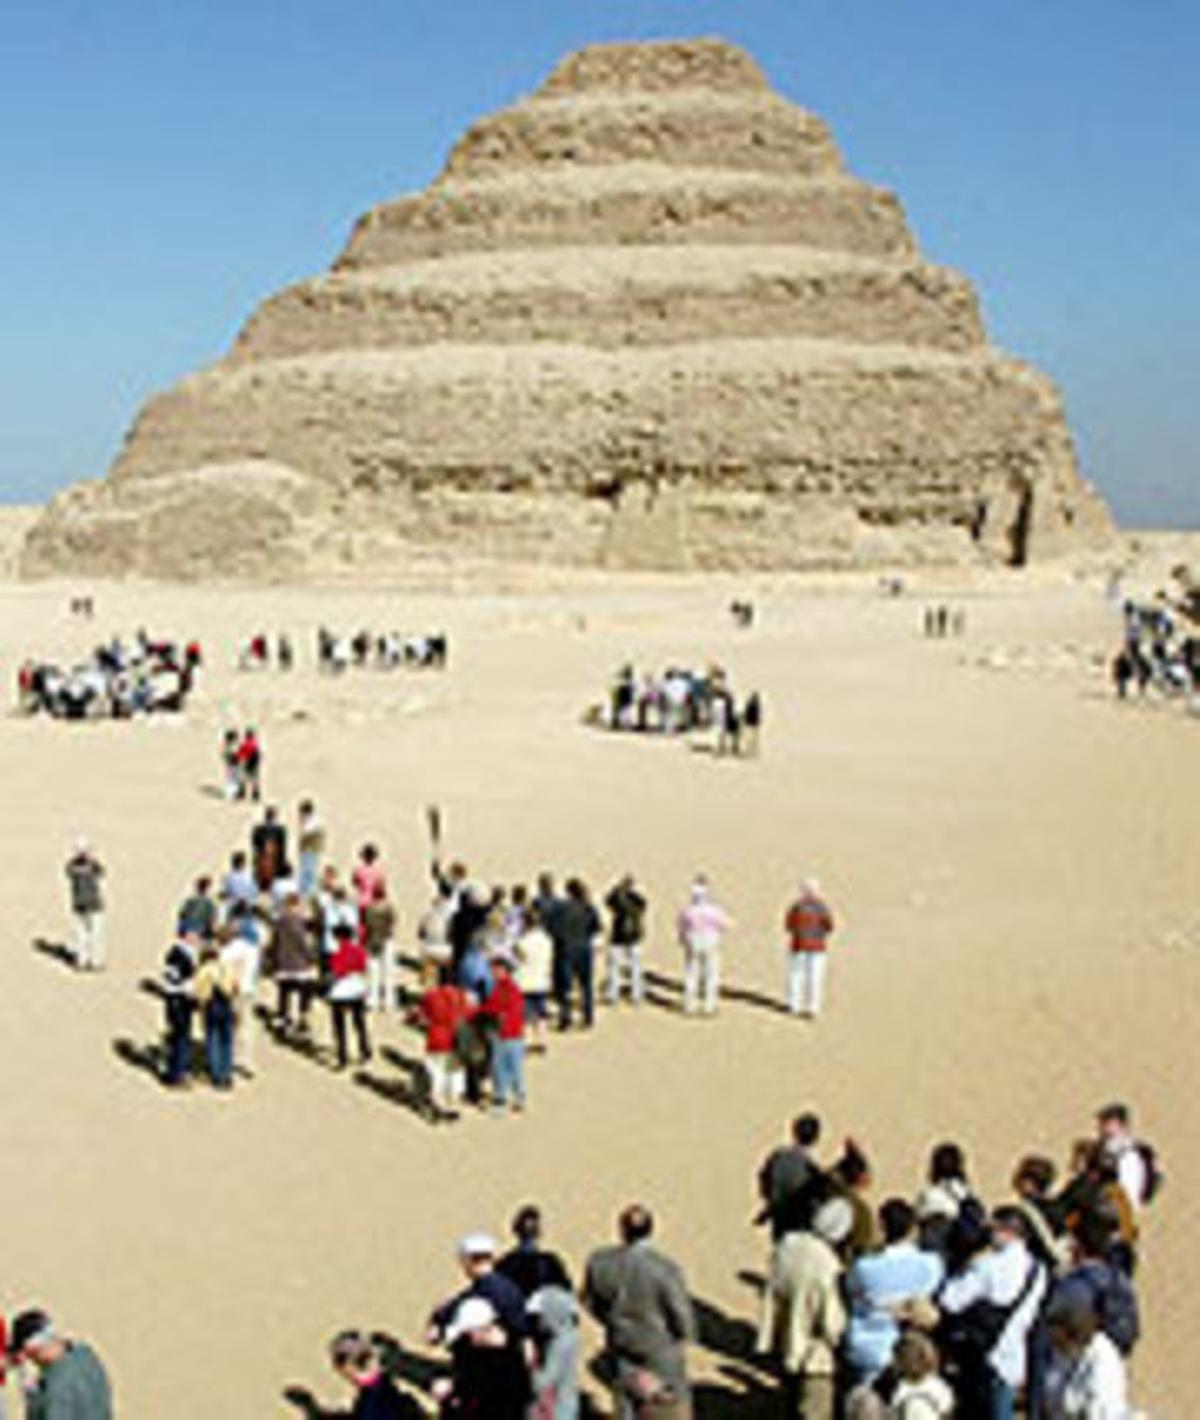 Un grup de turistes visiten la piràmide de Sakkara.